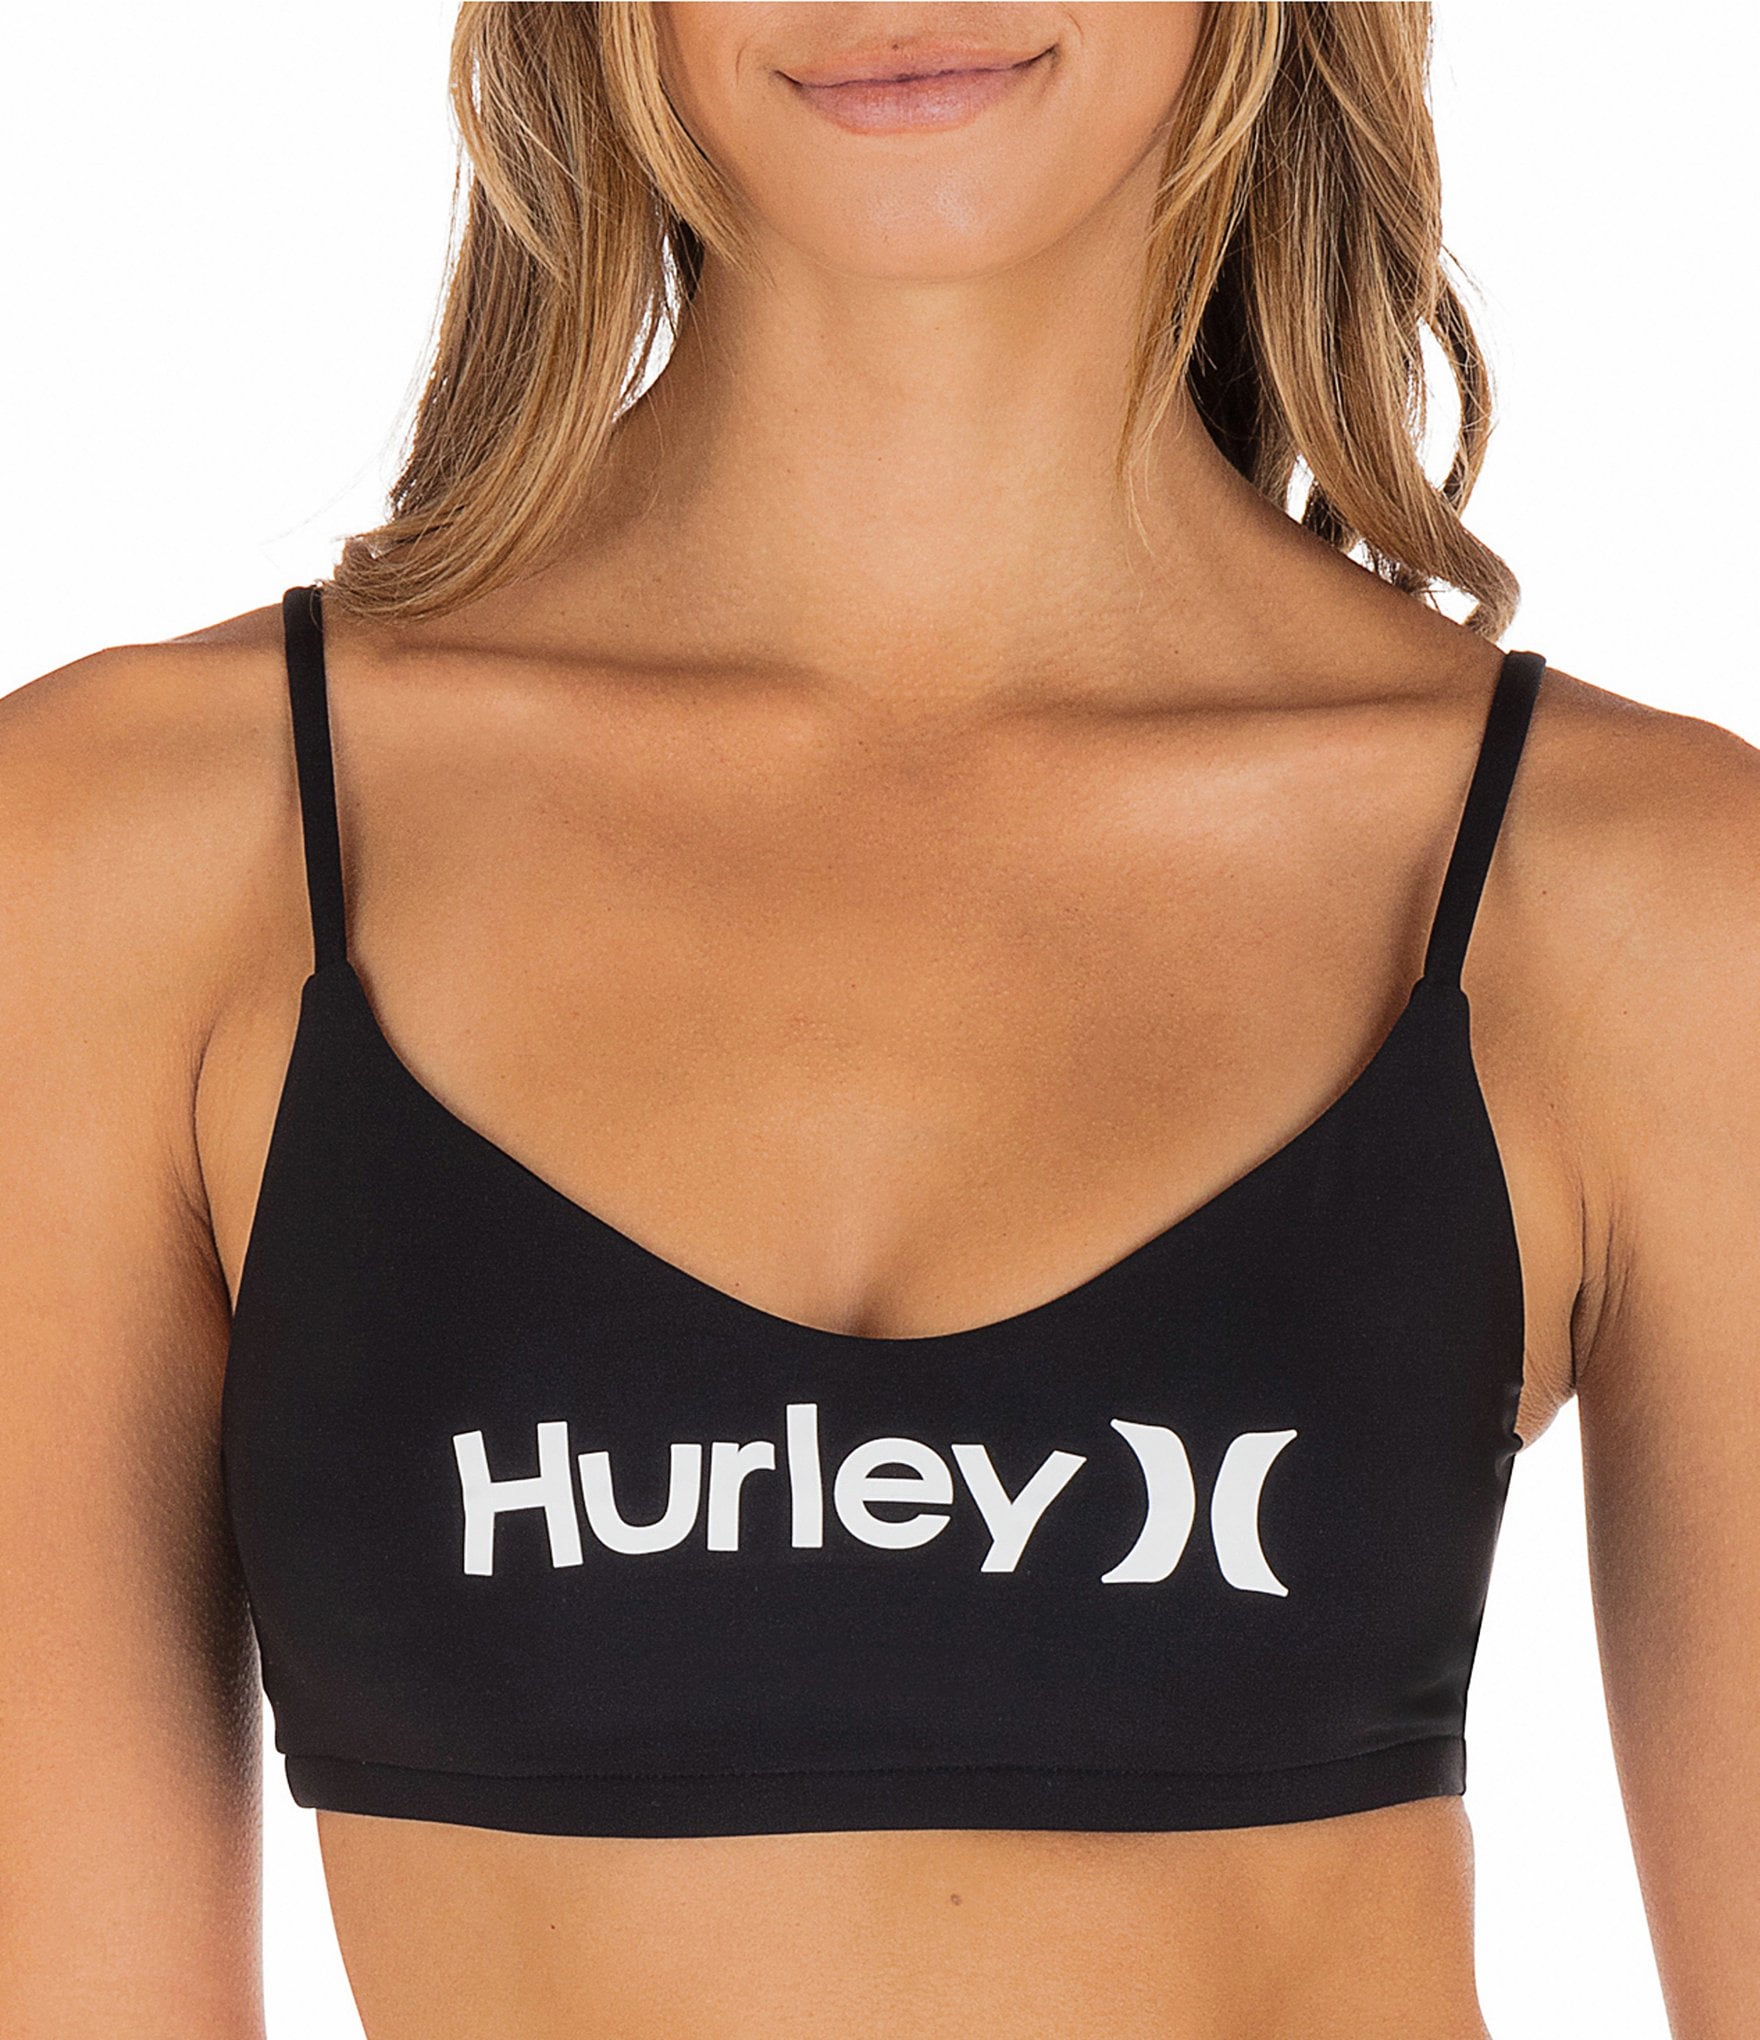 Hurley Womens Bikini Surf Top : : Clothing, Shoes & Accessories